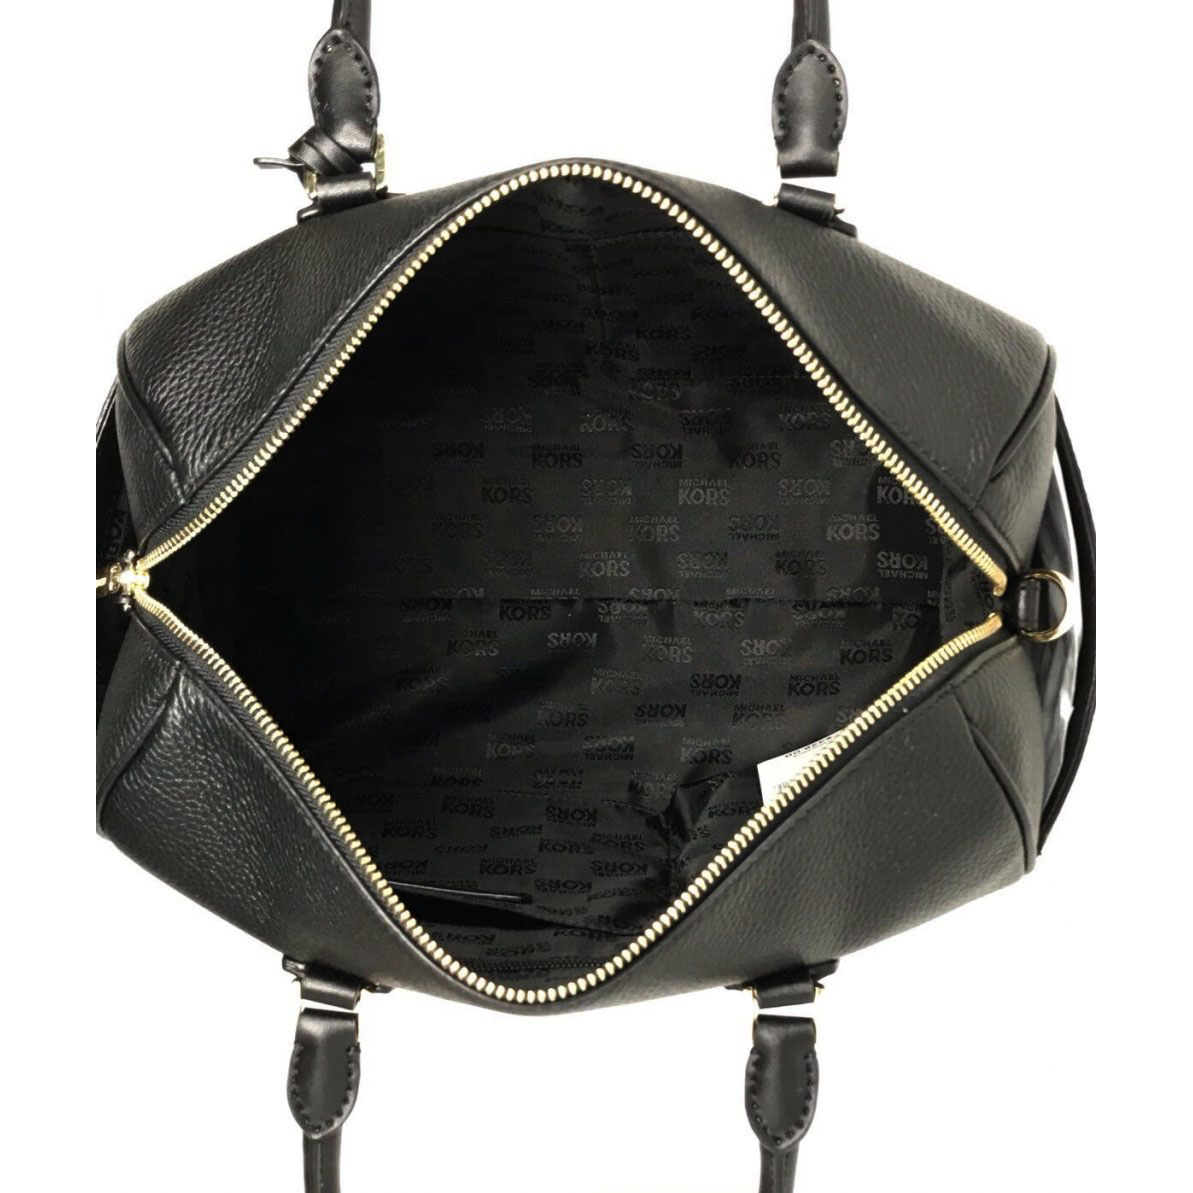 Michael Kors Aria Studded Satchel Crossbody Bag Black # 35S8GXAS2L